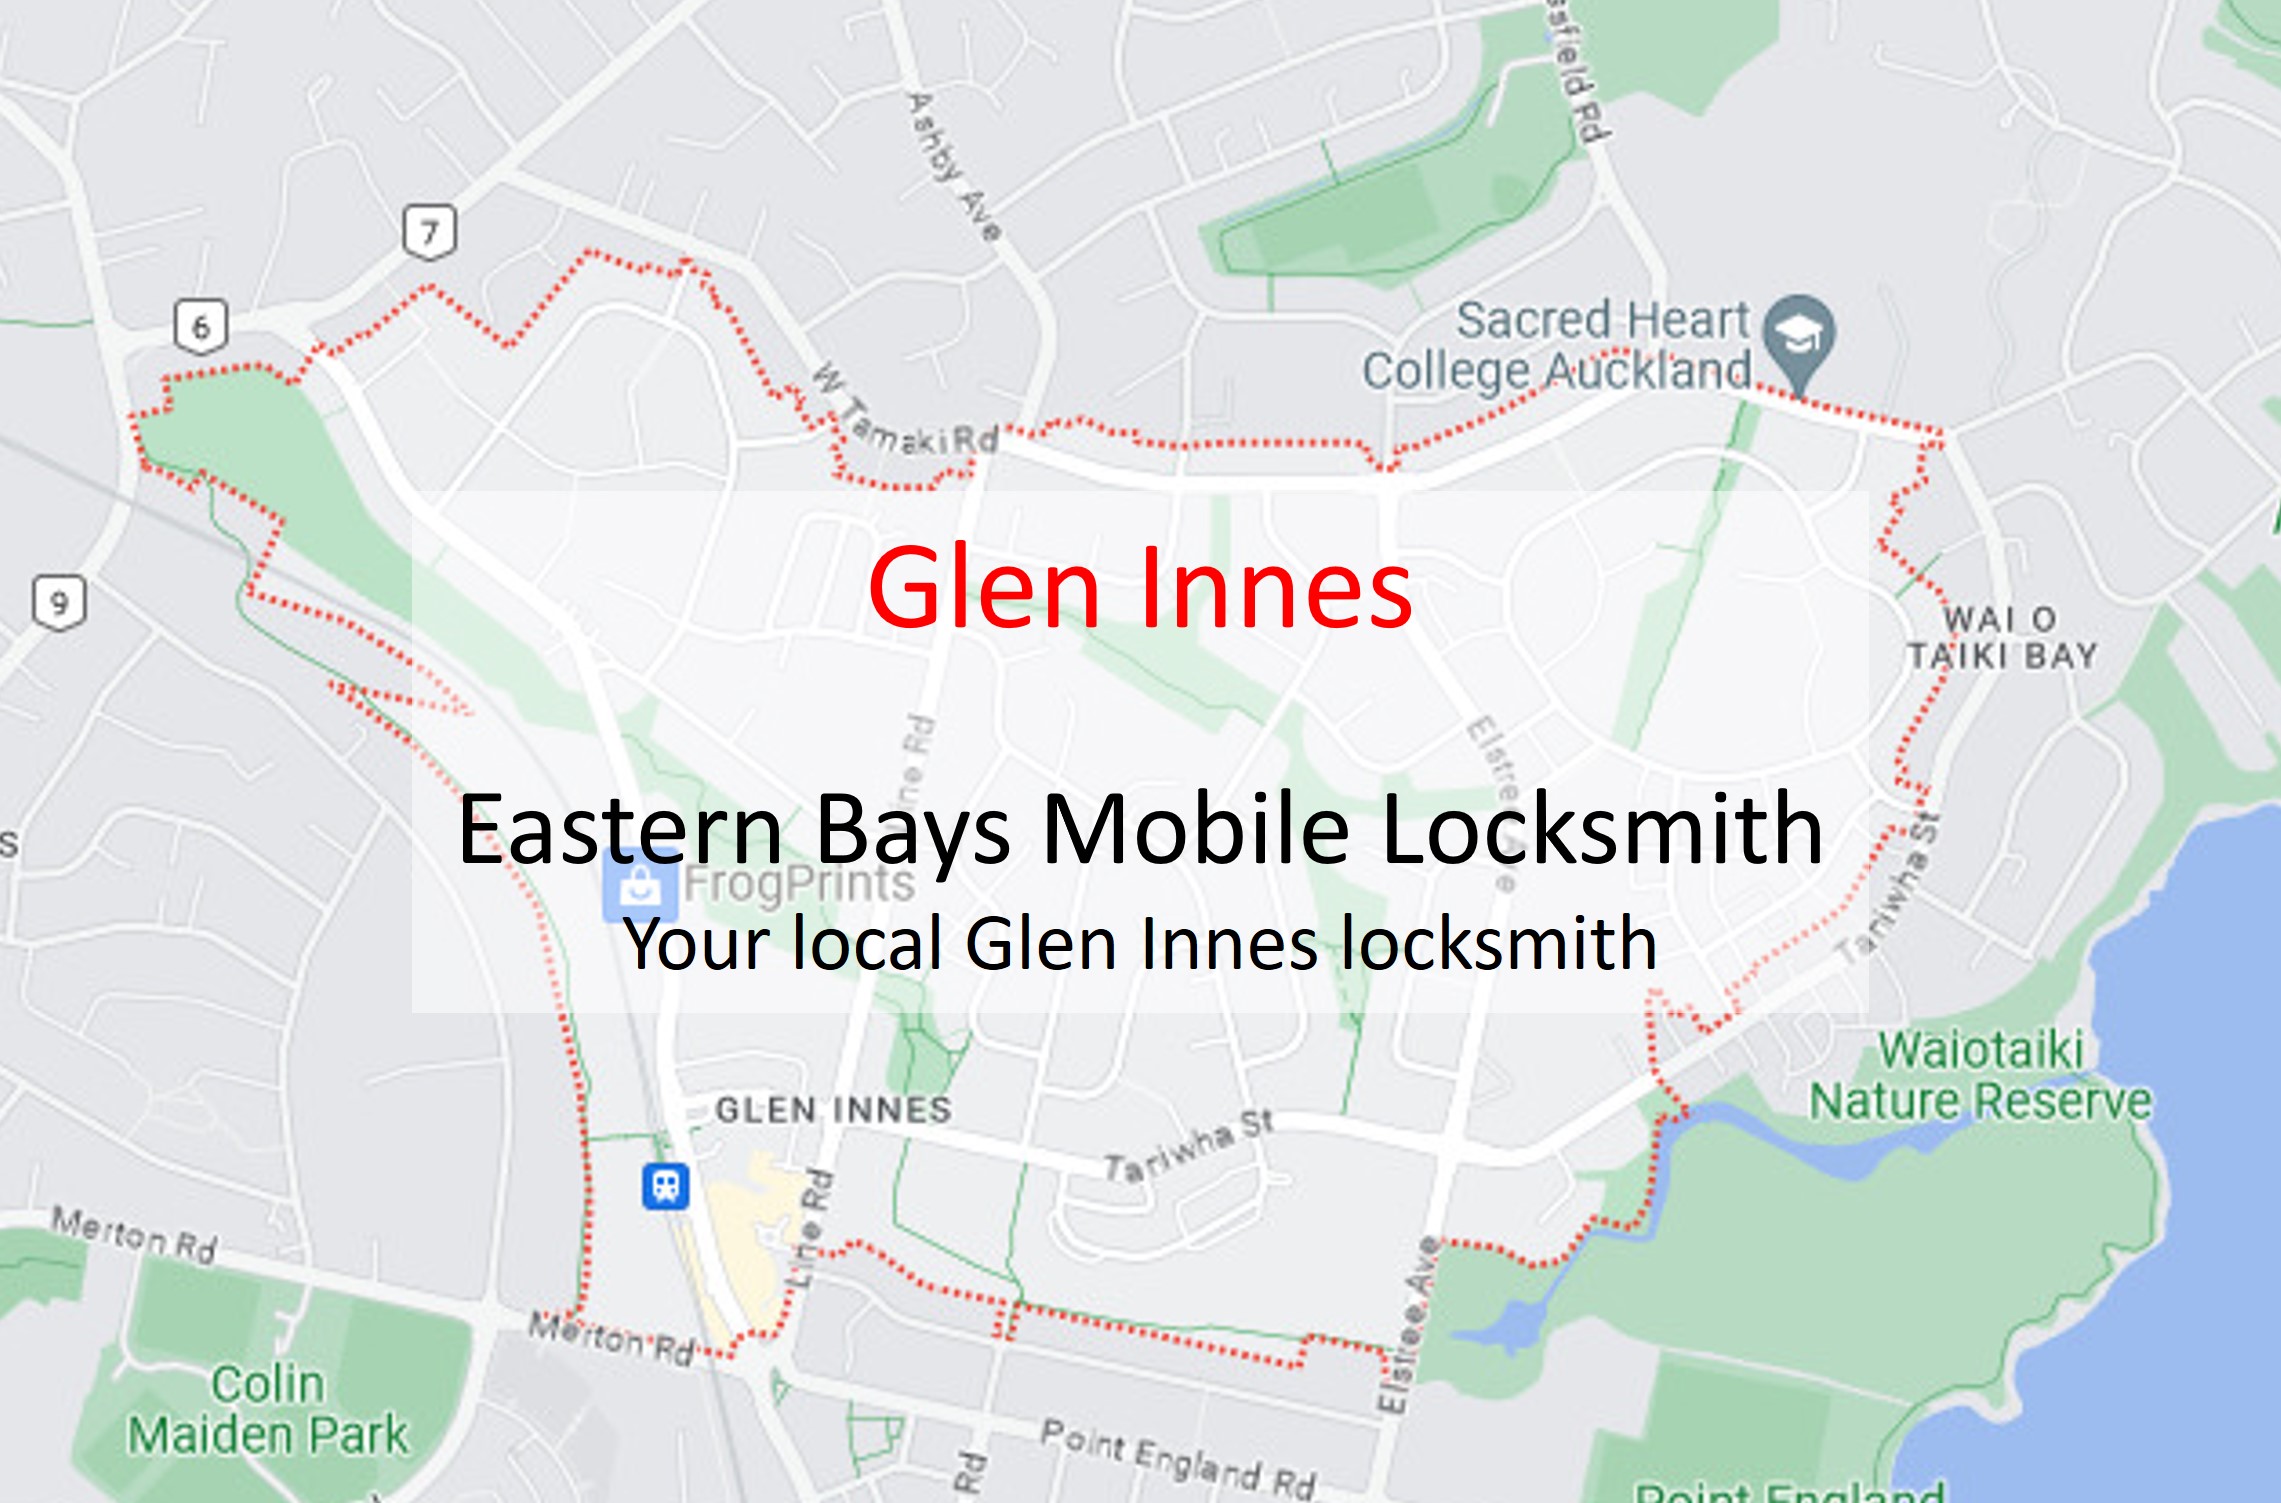 Your local Glen Innes locksmith